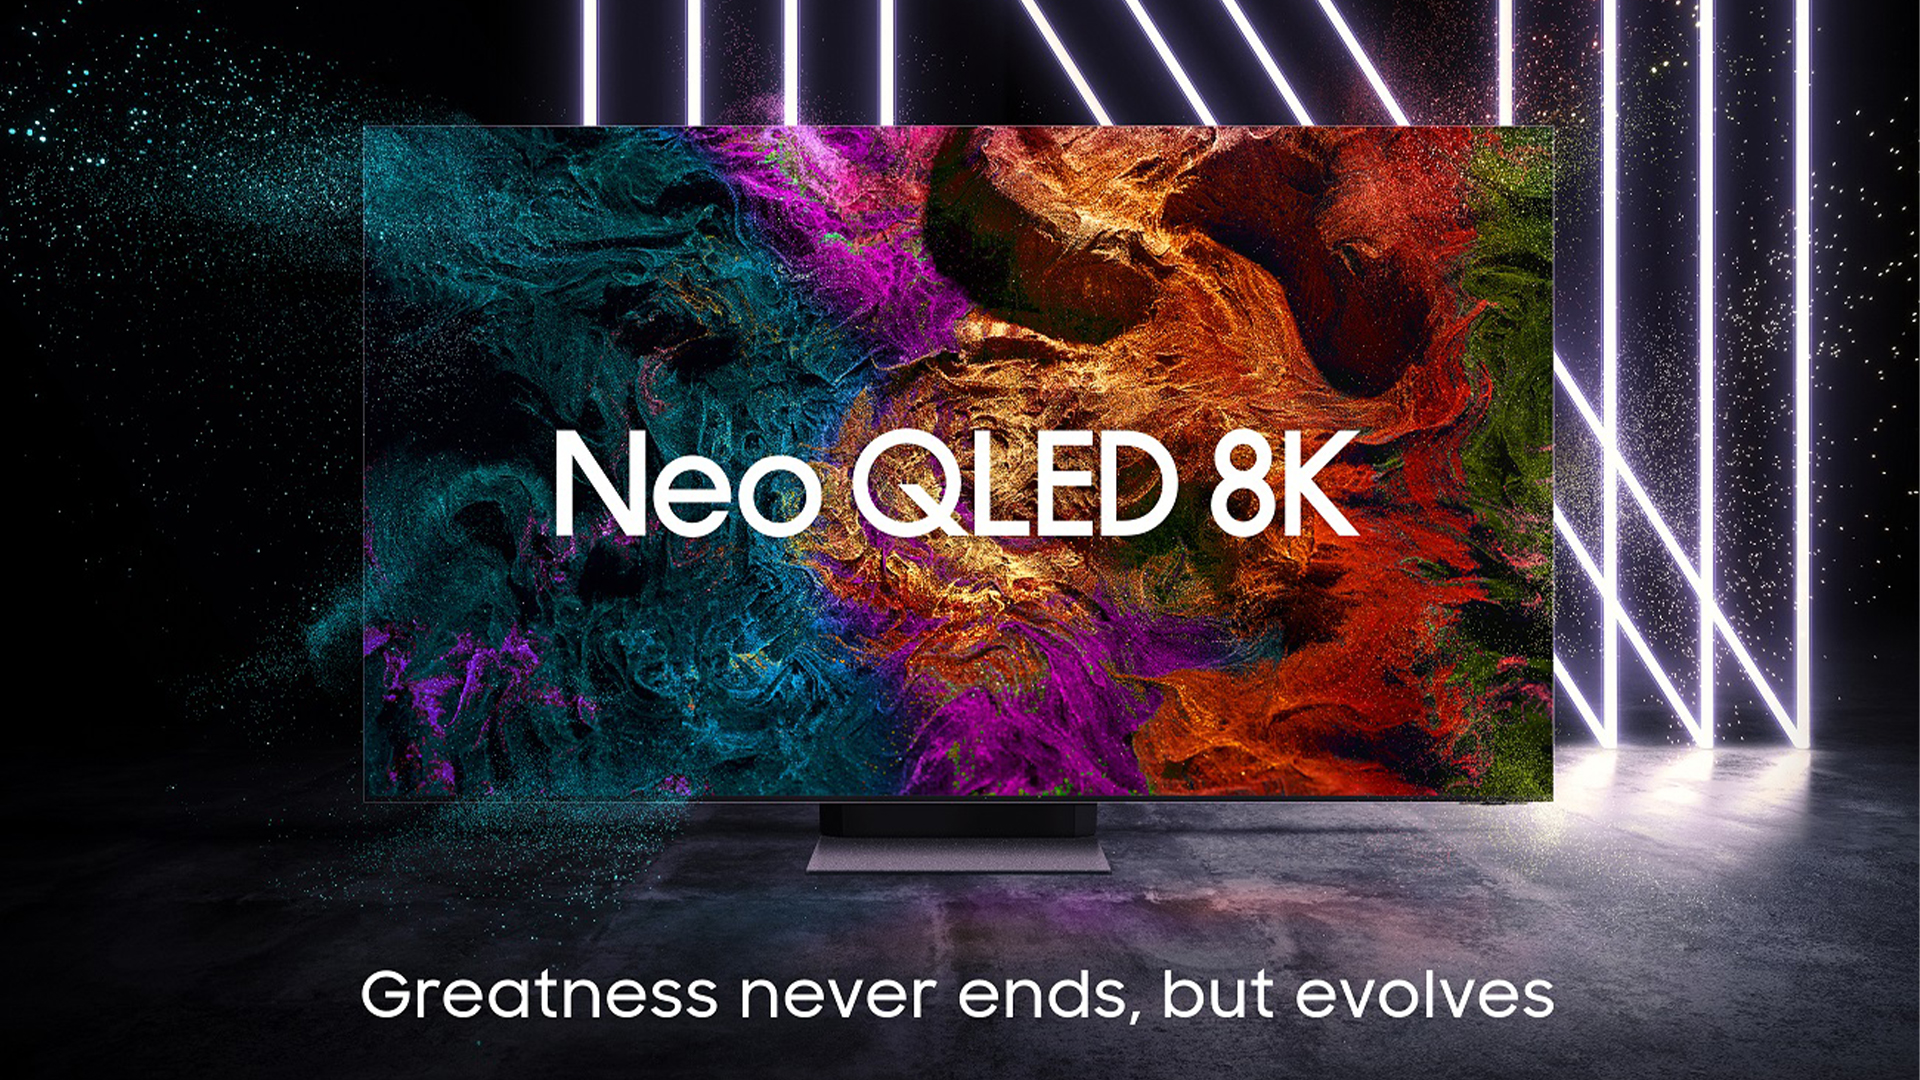 Crystal qled. Samsung Neo QLED 4k 2021. Samsung qn900a Neo QLED 8k Smart TV. Samsung Neo QLED 8k 2023. Samsung' 85 "Neo QLED" 8k TV - qn900a (2021).